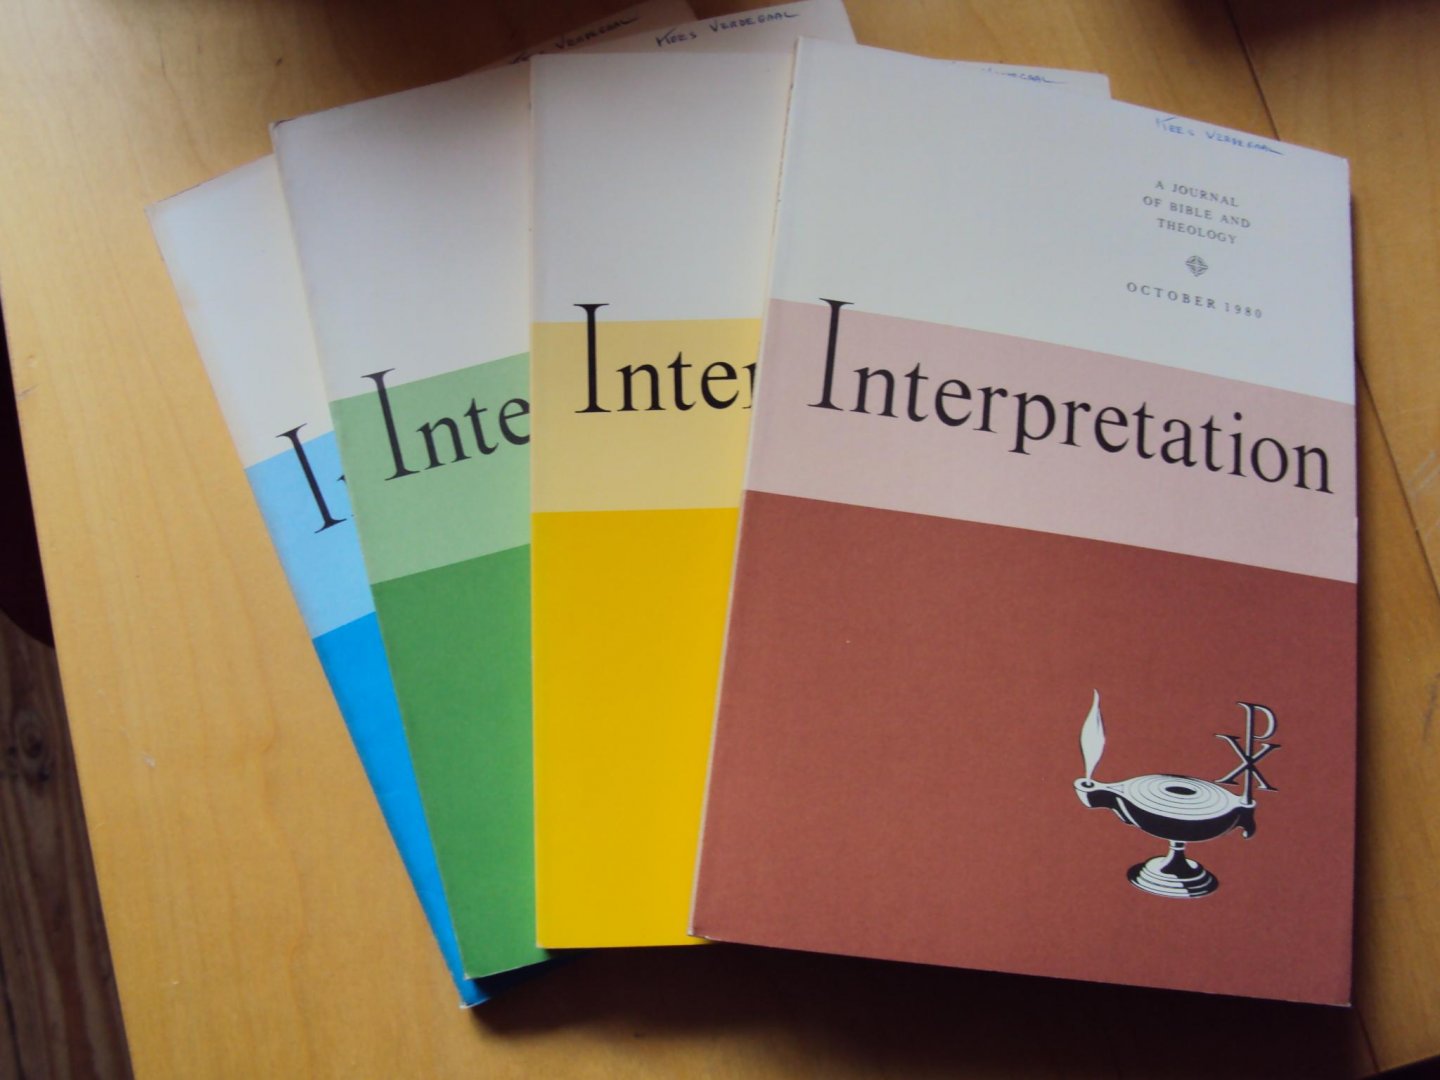  - Interpretation. A Journal of Bible and Theology, Vol. XXXIV nos. 1-4